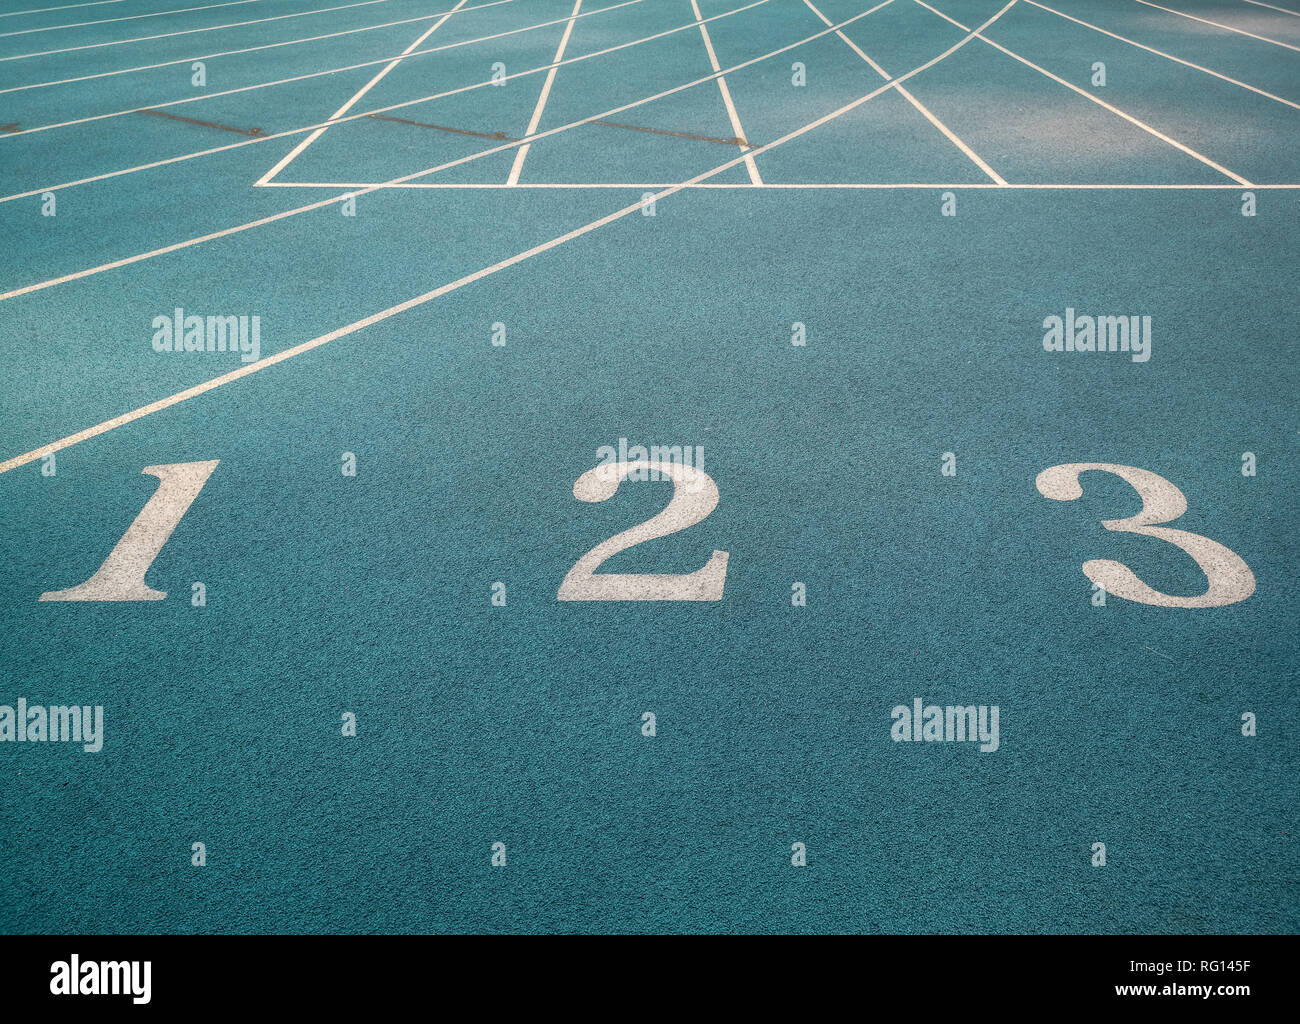 Track number at Athletics Stadium Running isolated Stock Photo